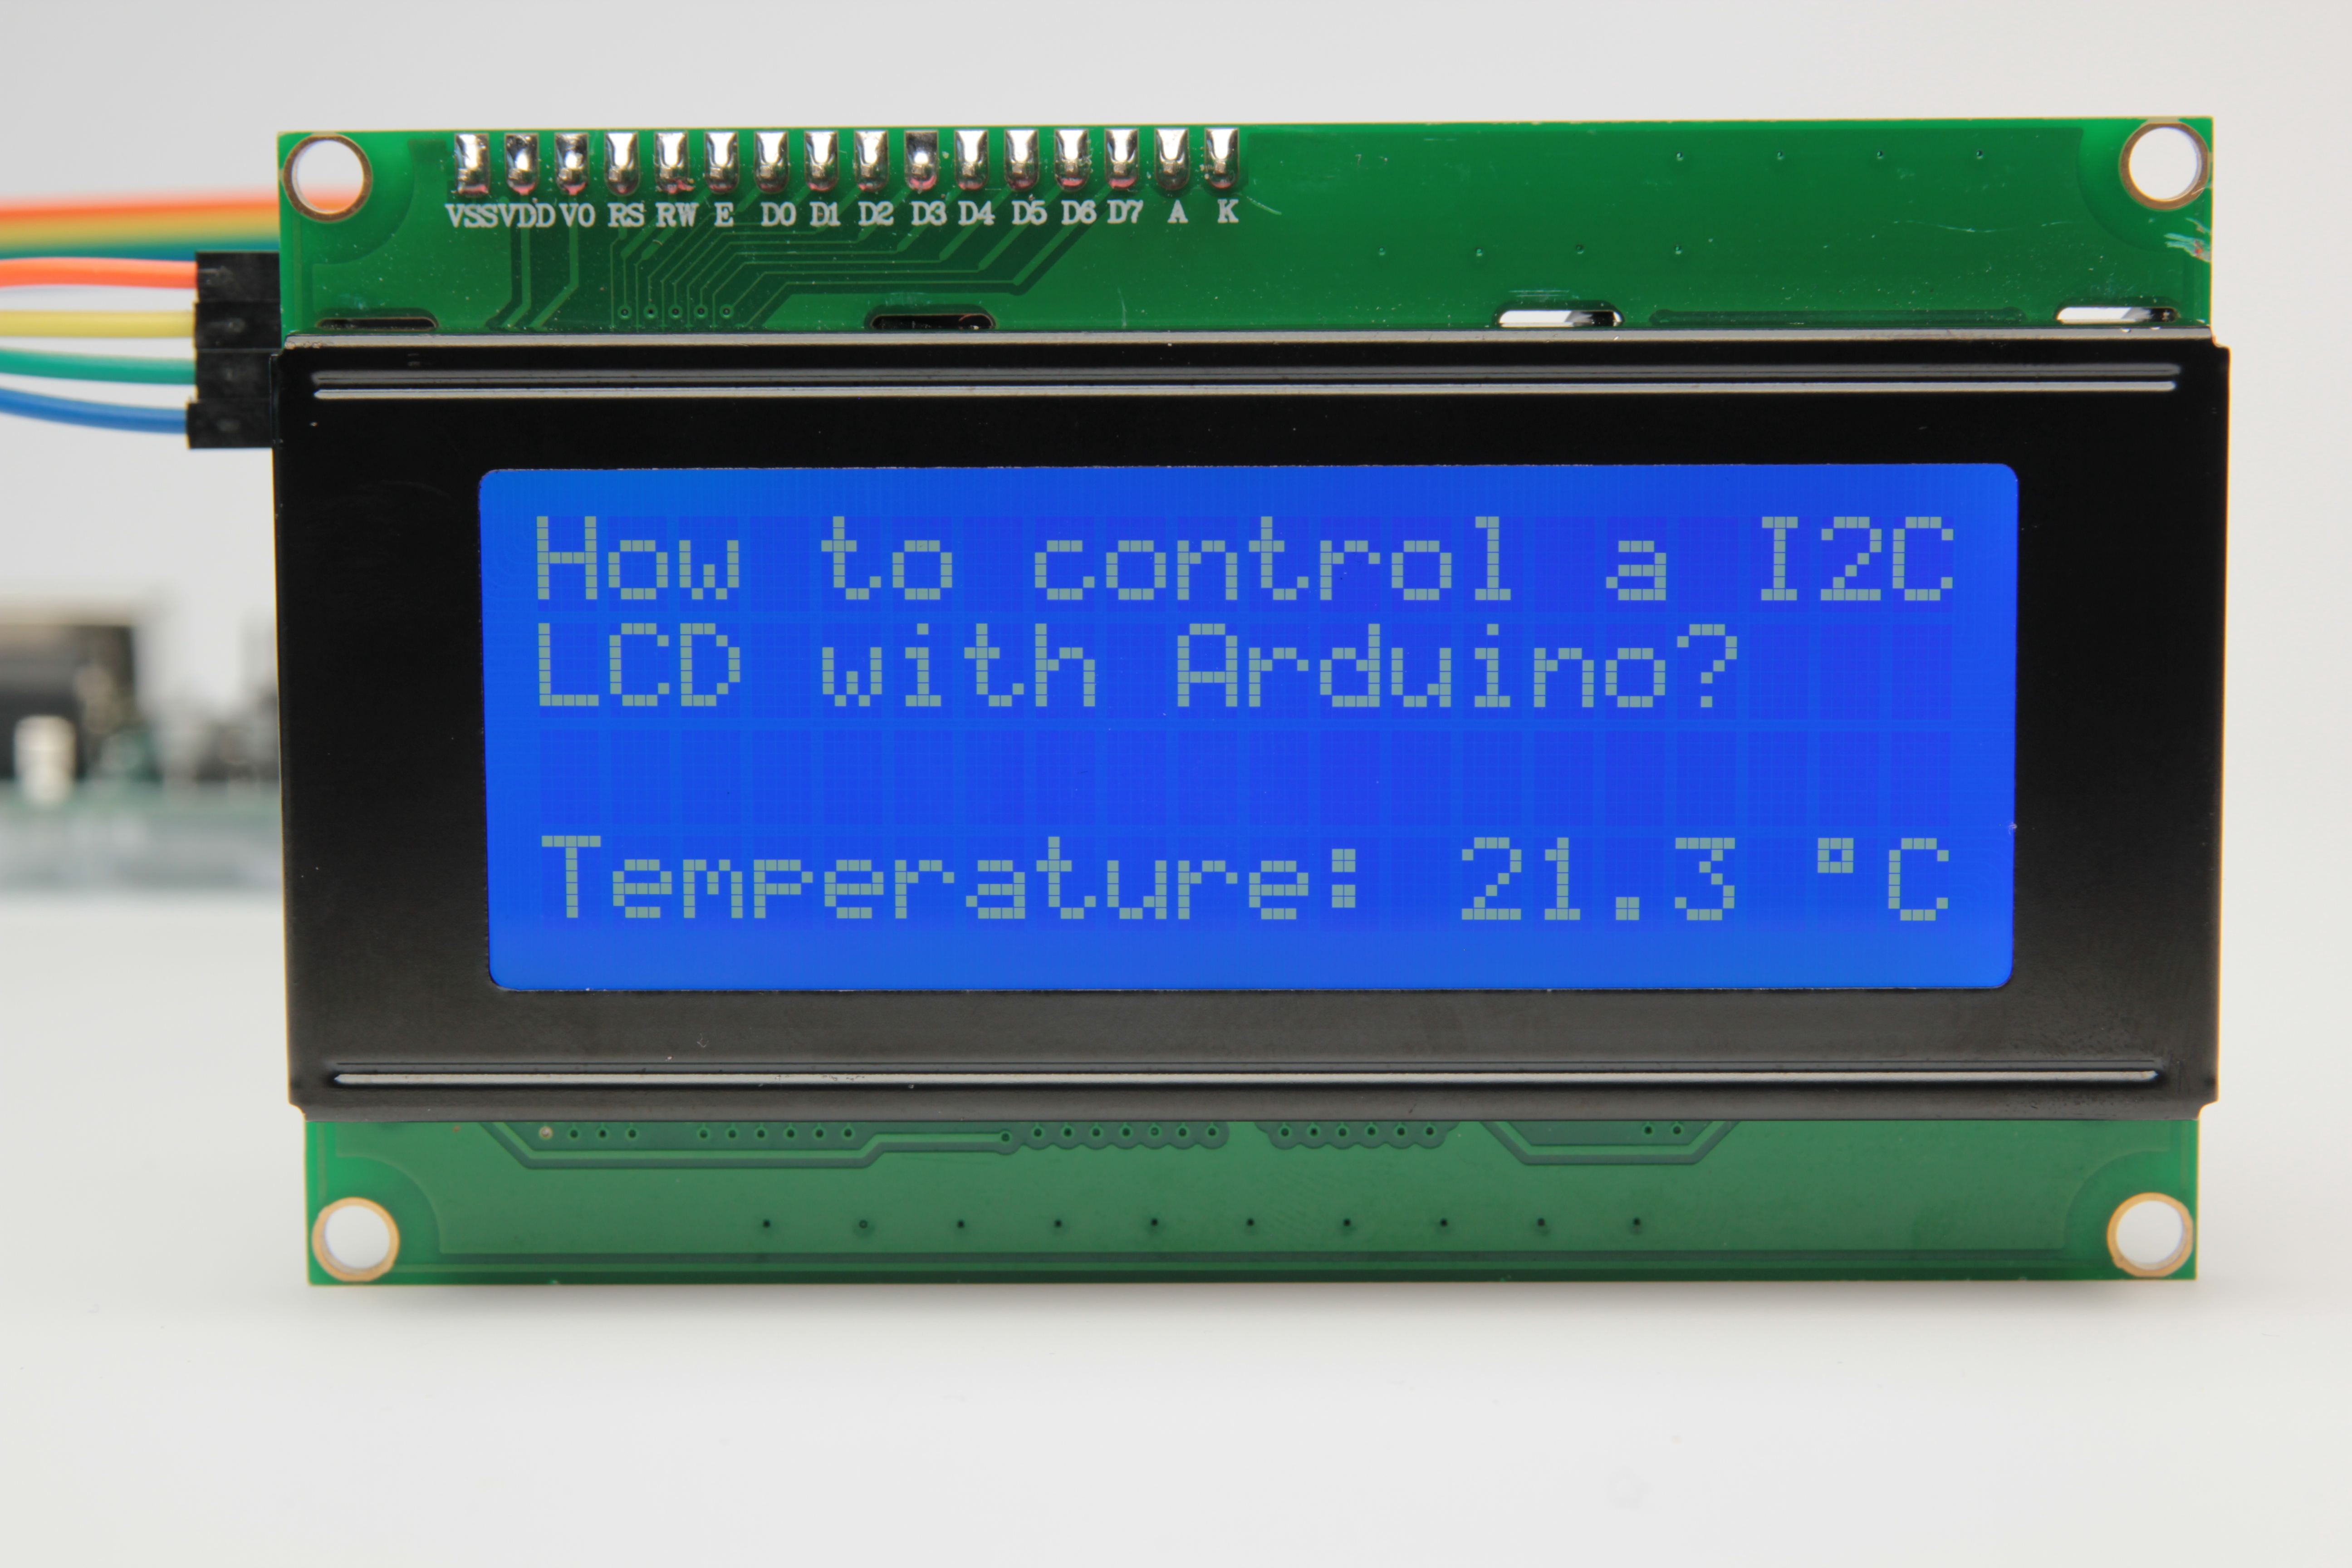 IIC I2C 2002 20x2 OLED Module Display With Arduino Example